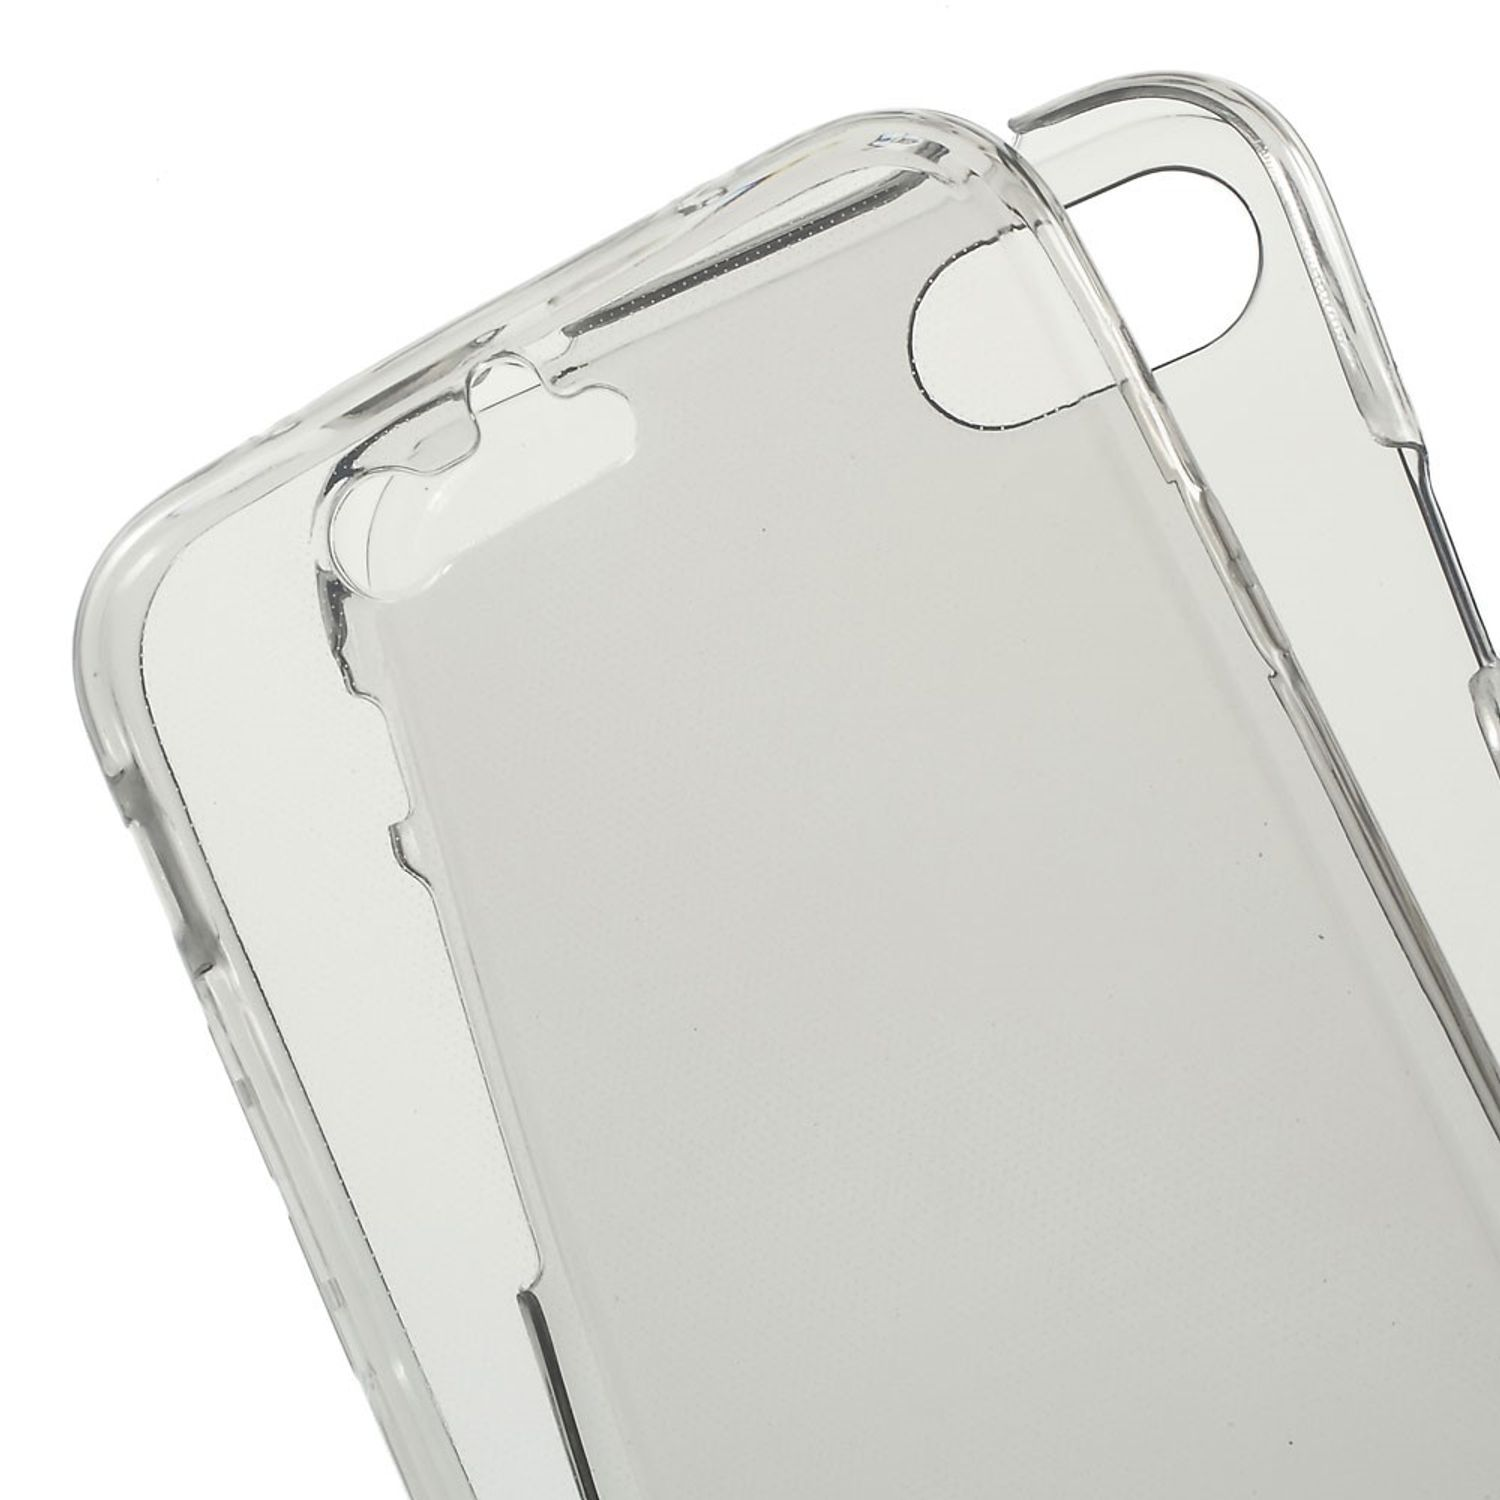 8, Handyhülle, DESIGN Apple, Transparent iPhone Backcover, KÖNIG